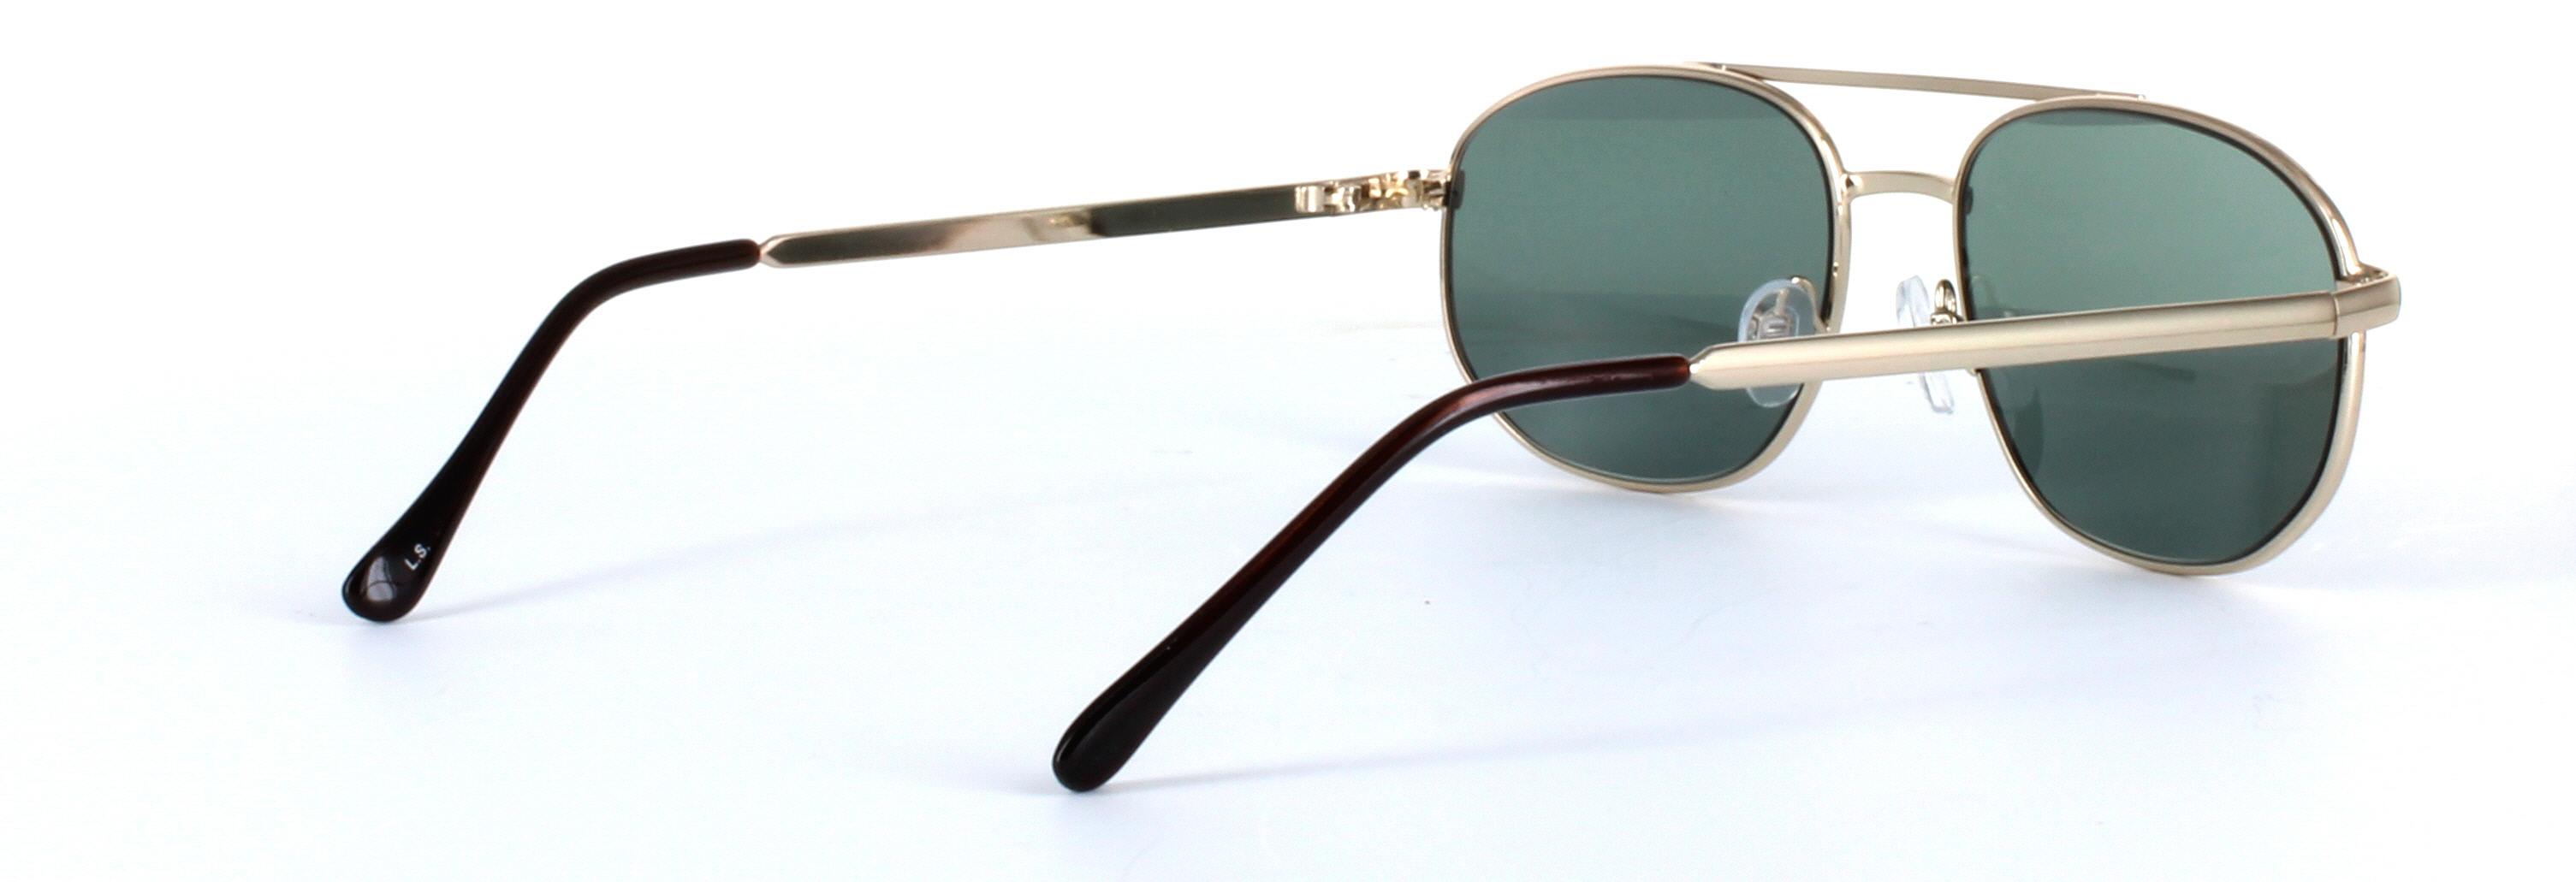 Spartan Sunglasses Gold/Green | Glasses | Glasses2You